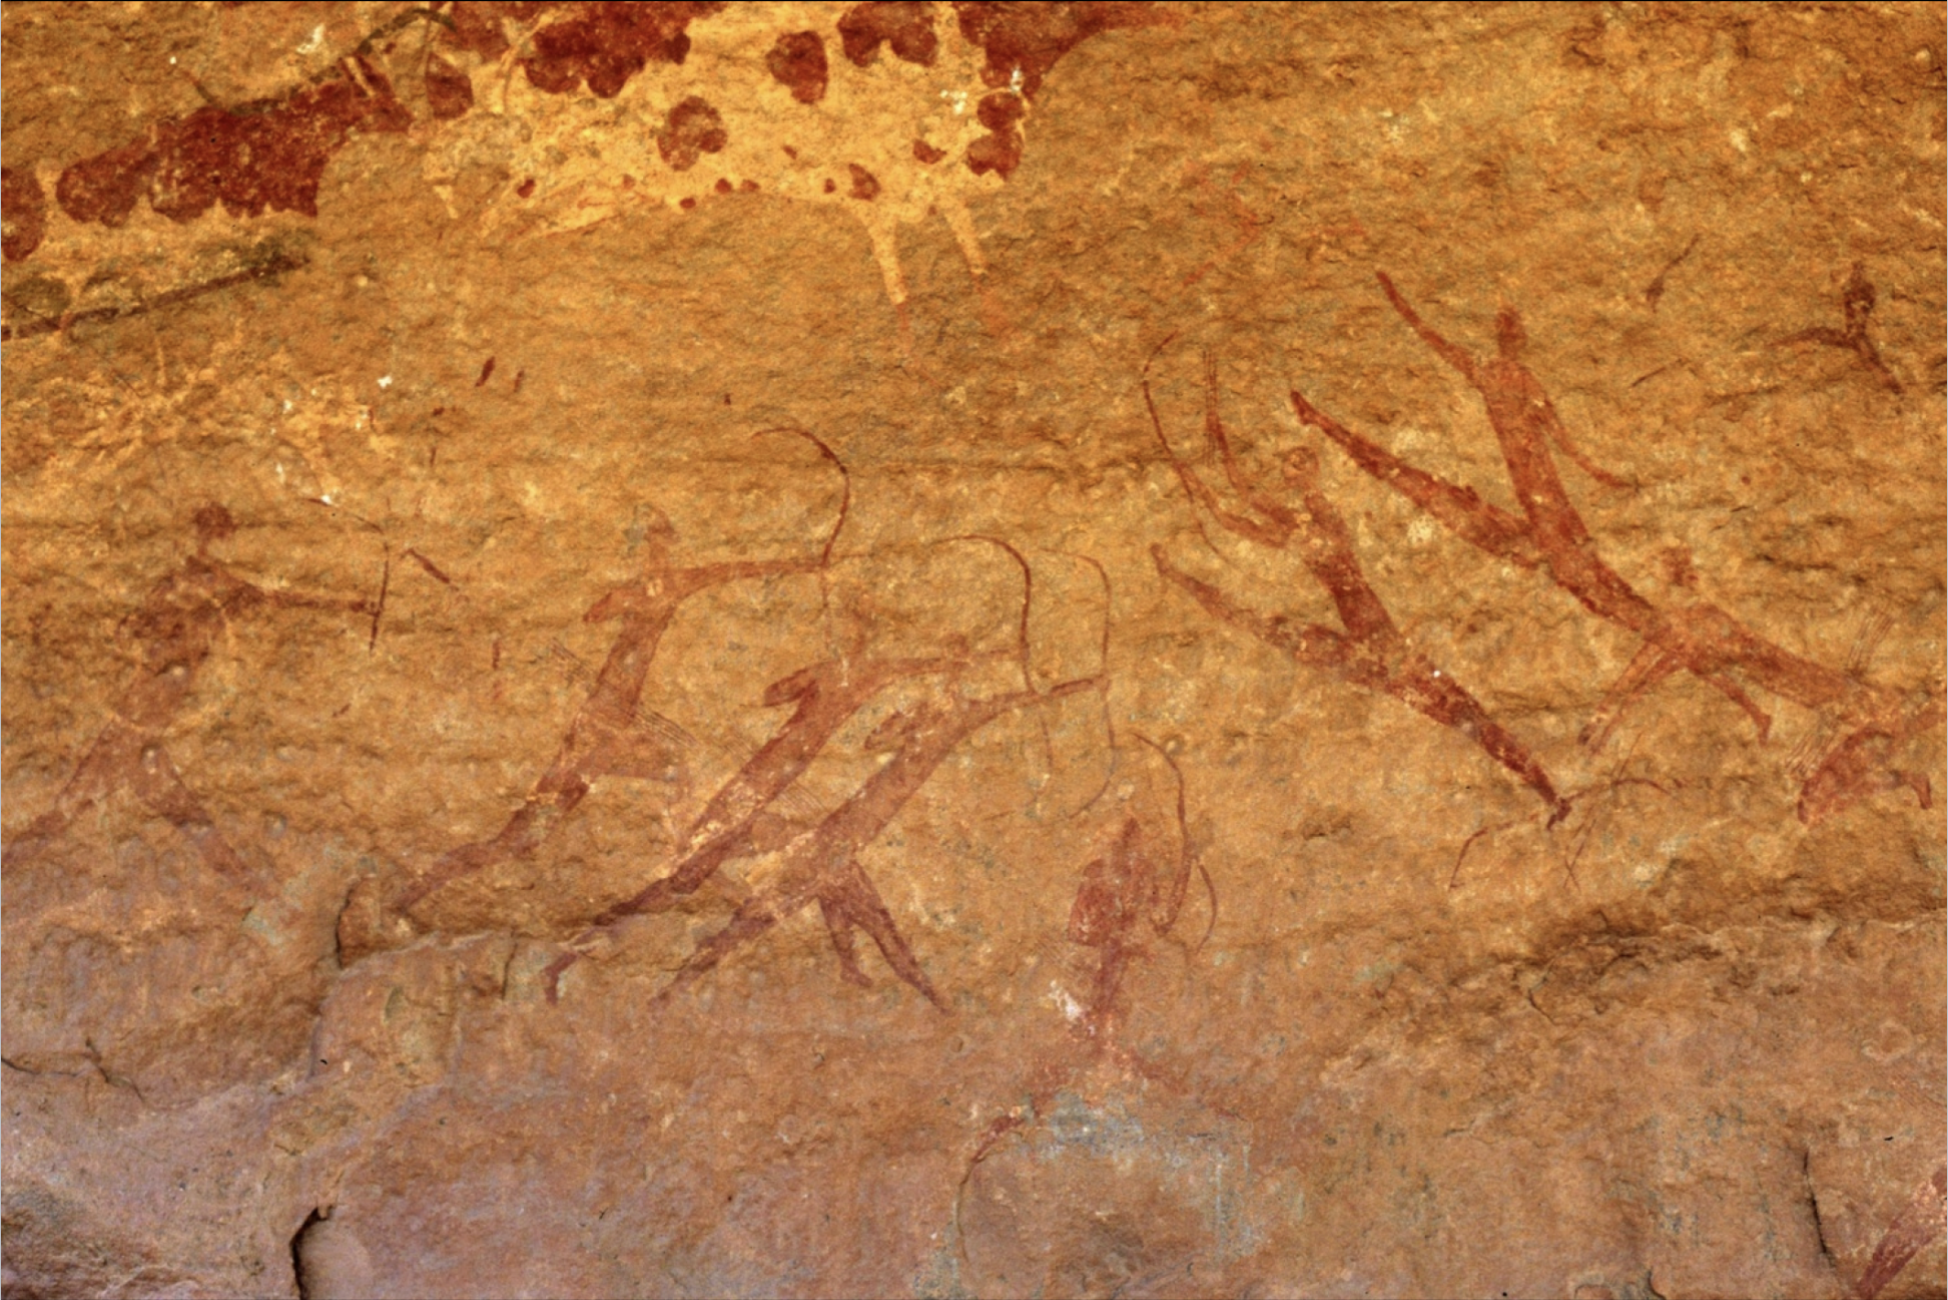 <p>Period: Prehistoric Cave Art (Archaic Style)</p><p>Location: Tassili n’ Ajjer, Algeria</p><p>Dates: 12,000<sub>BCE</sub> - 1,000<sub>BCE</sub></p><p>Medium: <span>pigment (ochre?) on sandstone</span></p>